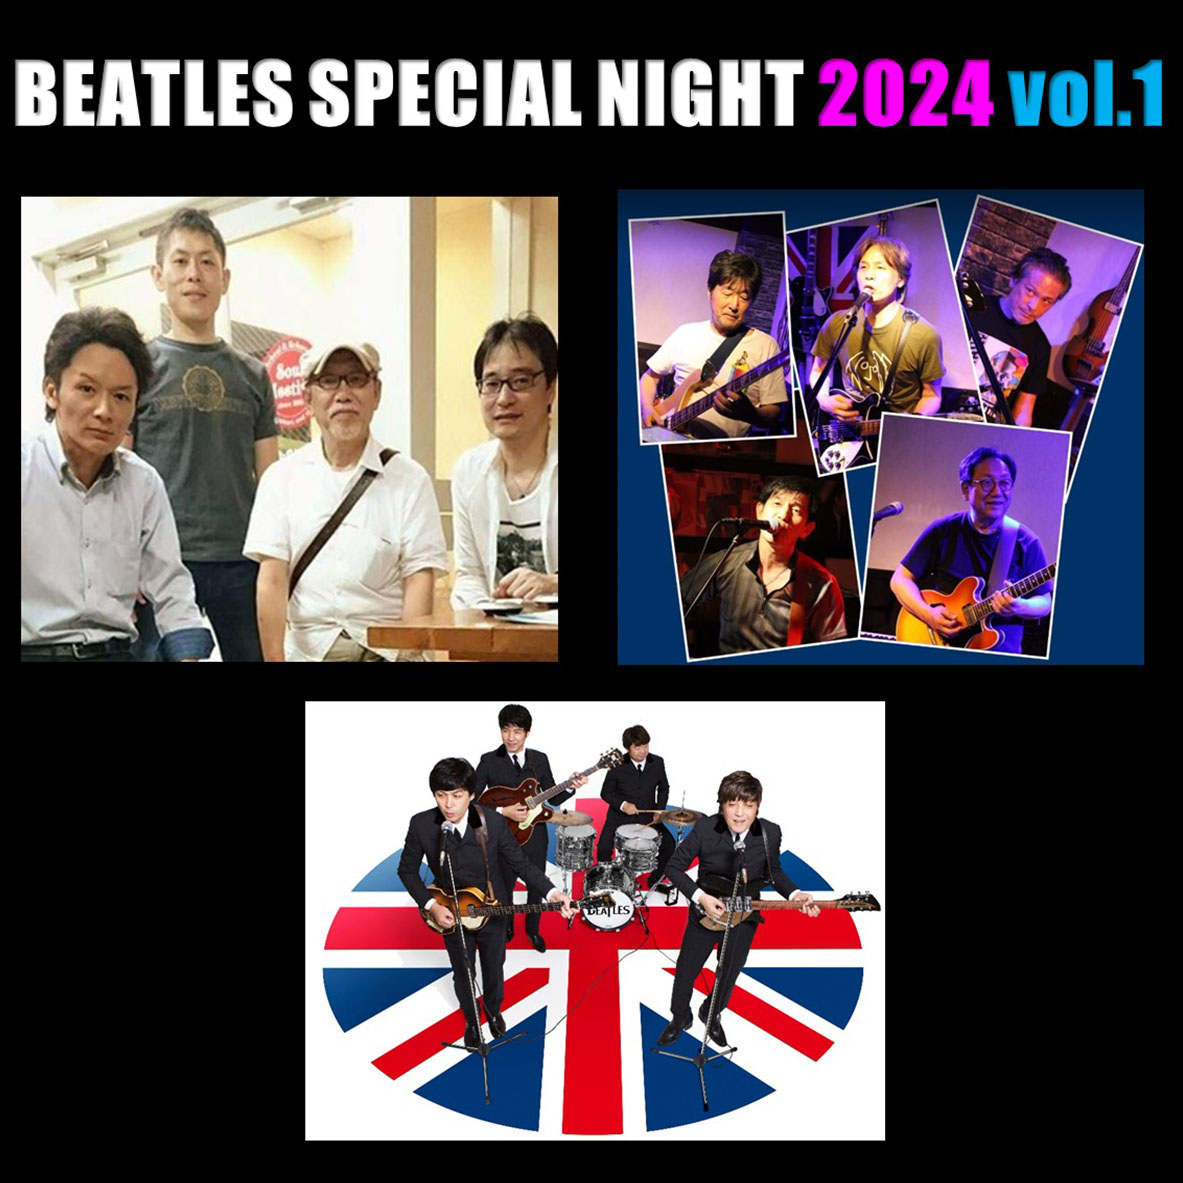 【出演予定】2月3日 BEATLES SPECIAL NIGHT 2024 vol.1